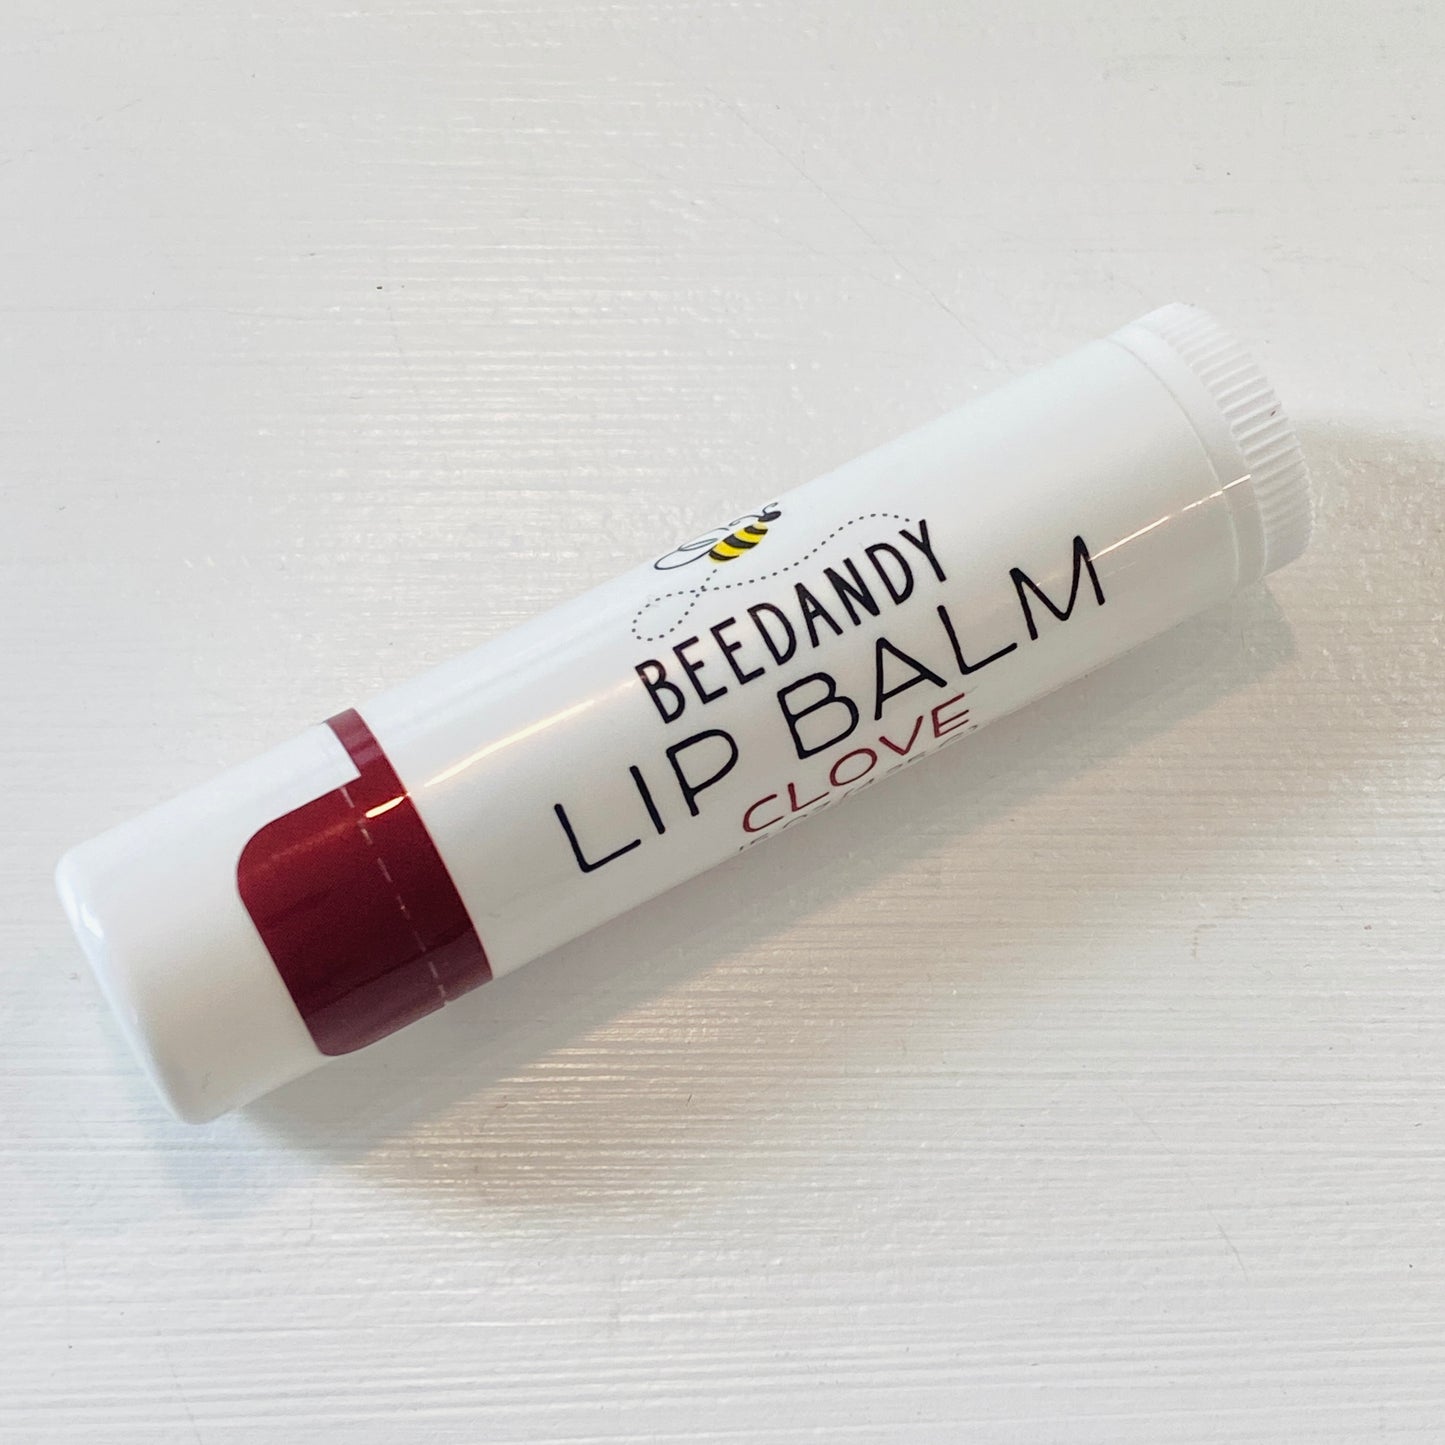 BeeDandy - Lip Balm